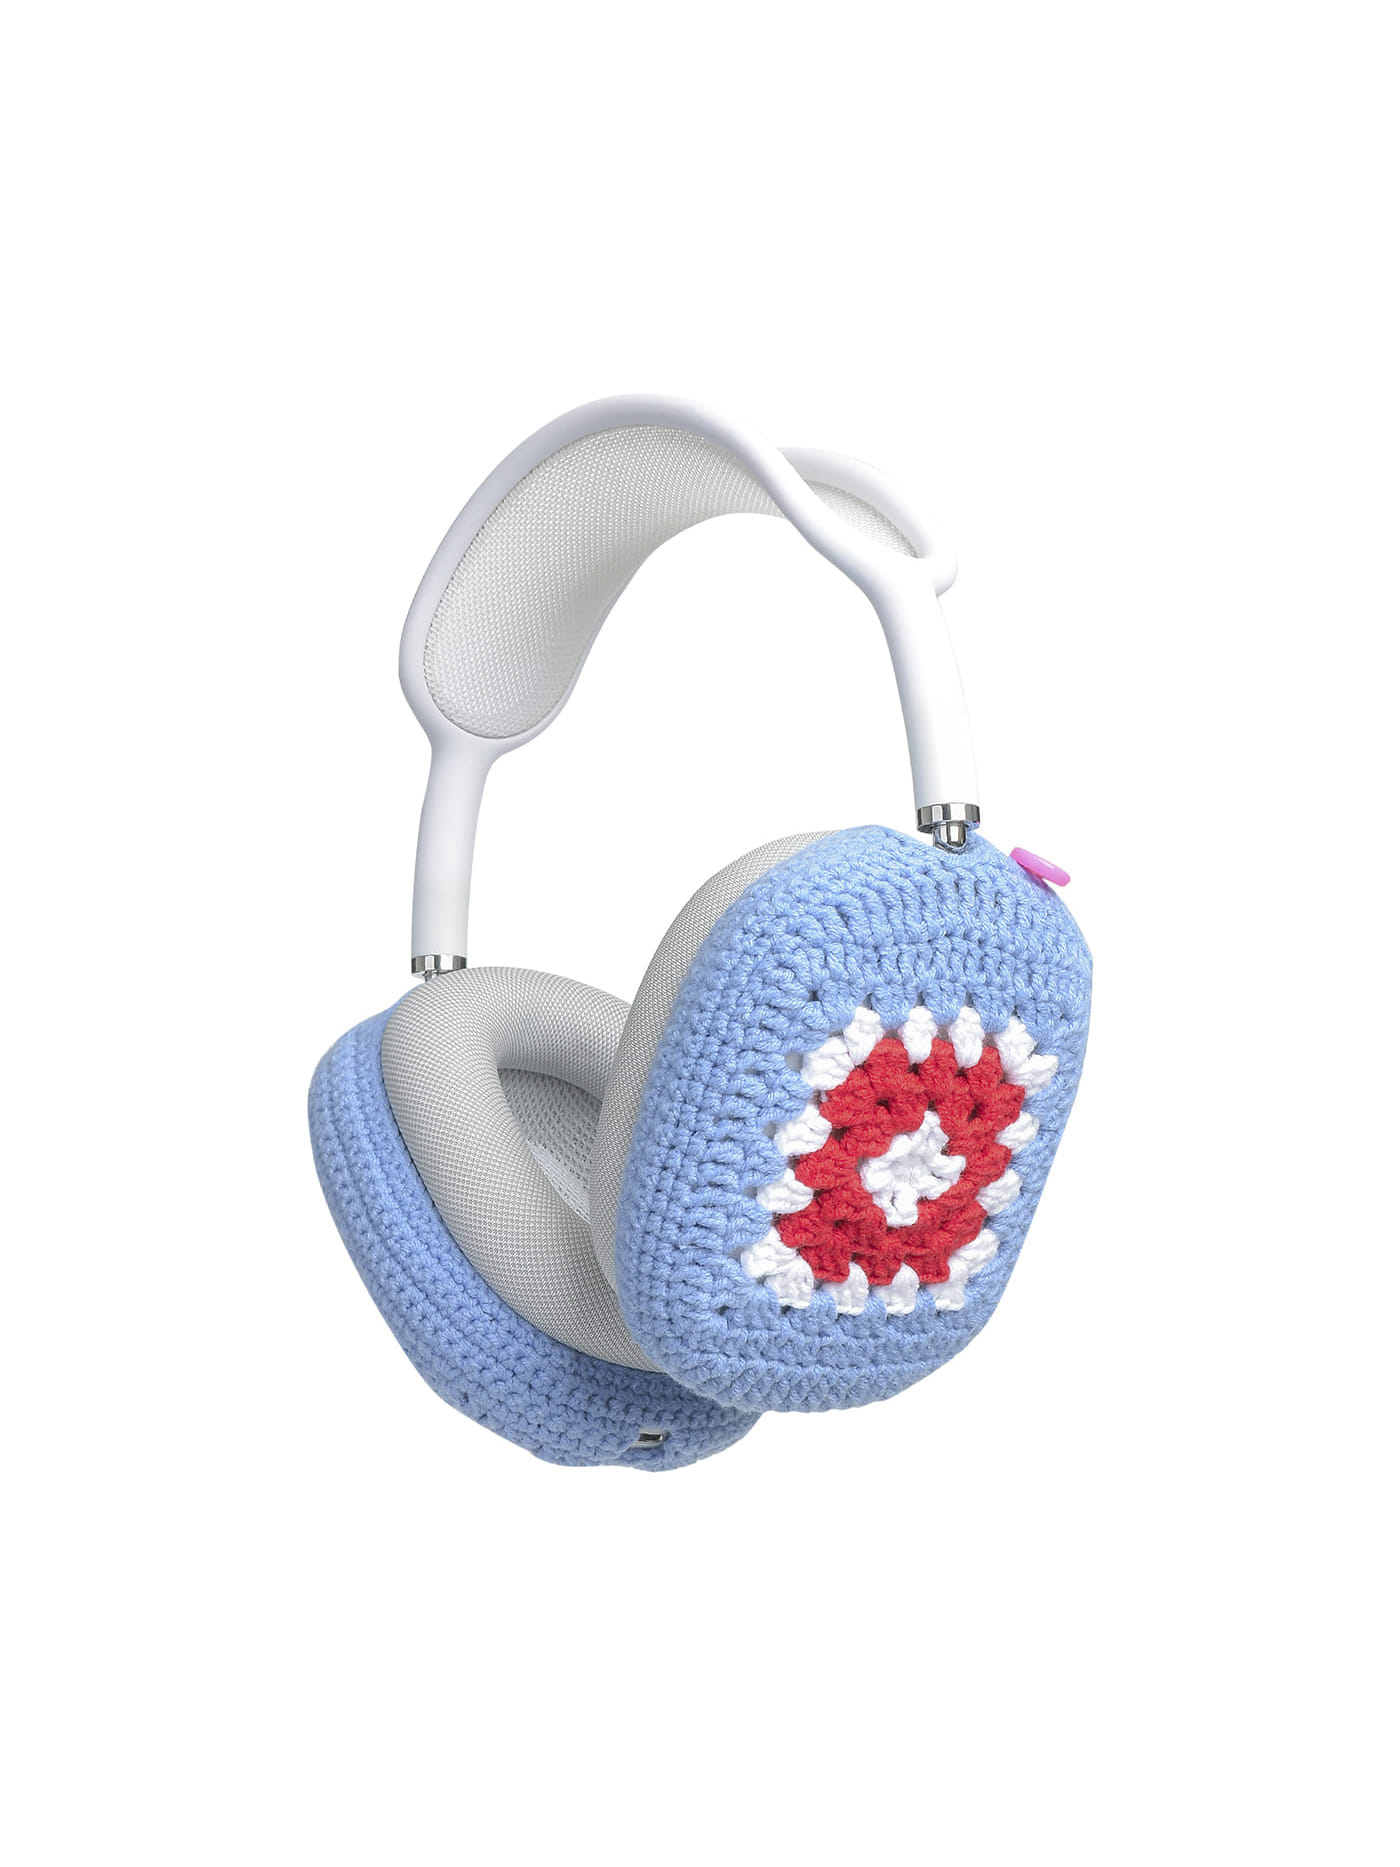 Airpods Max Case - Crochet (Blue)